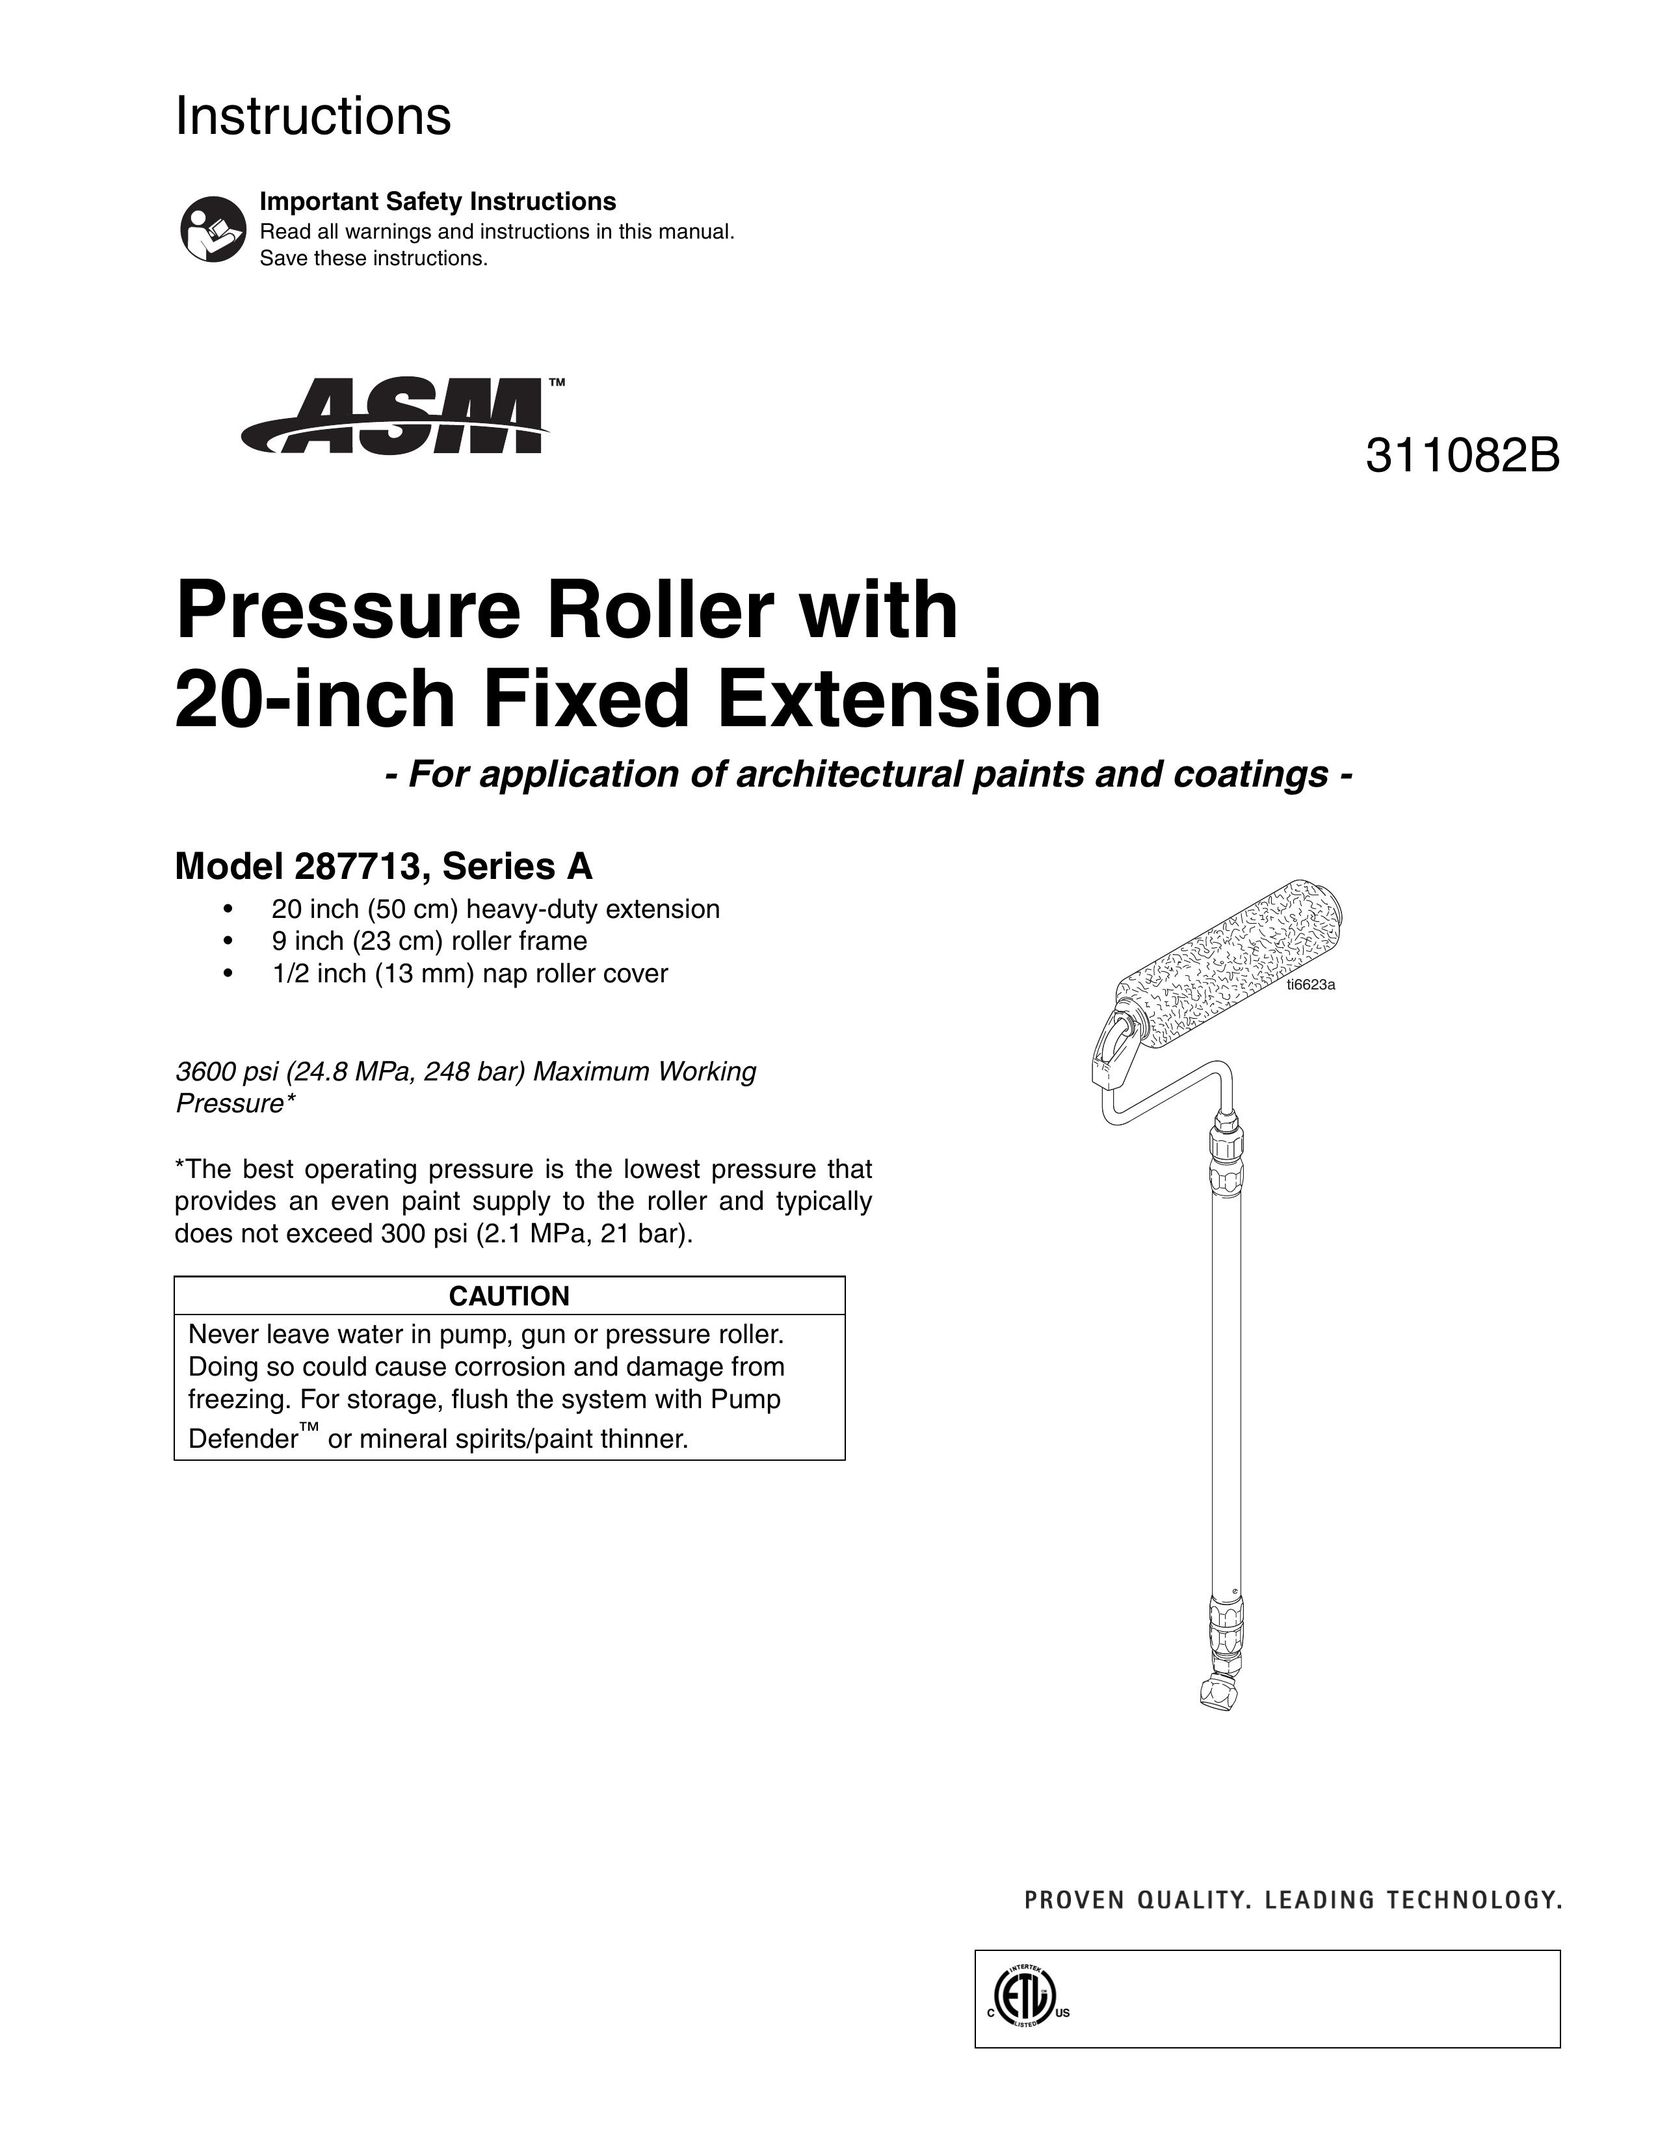 Graco Inc. 311082B Power Roller User Manual